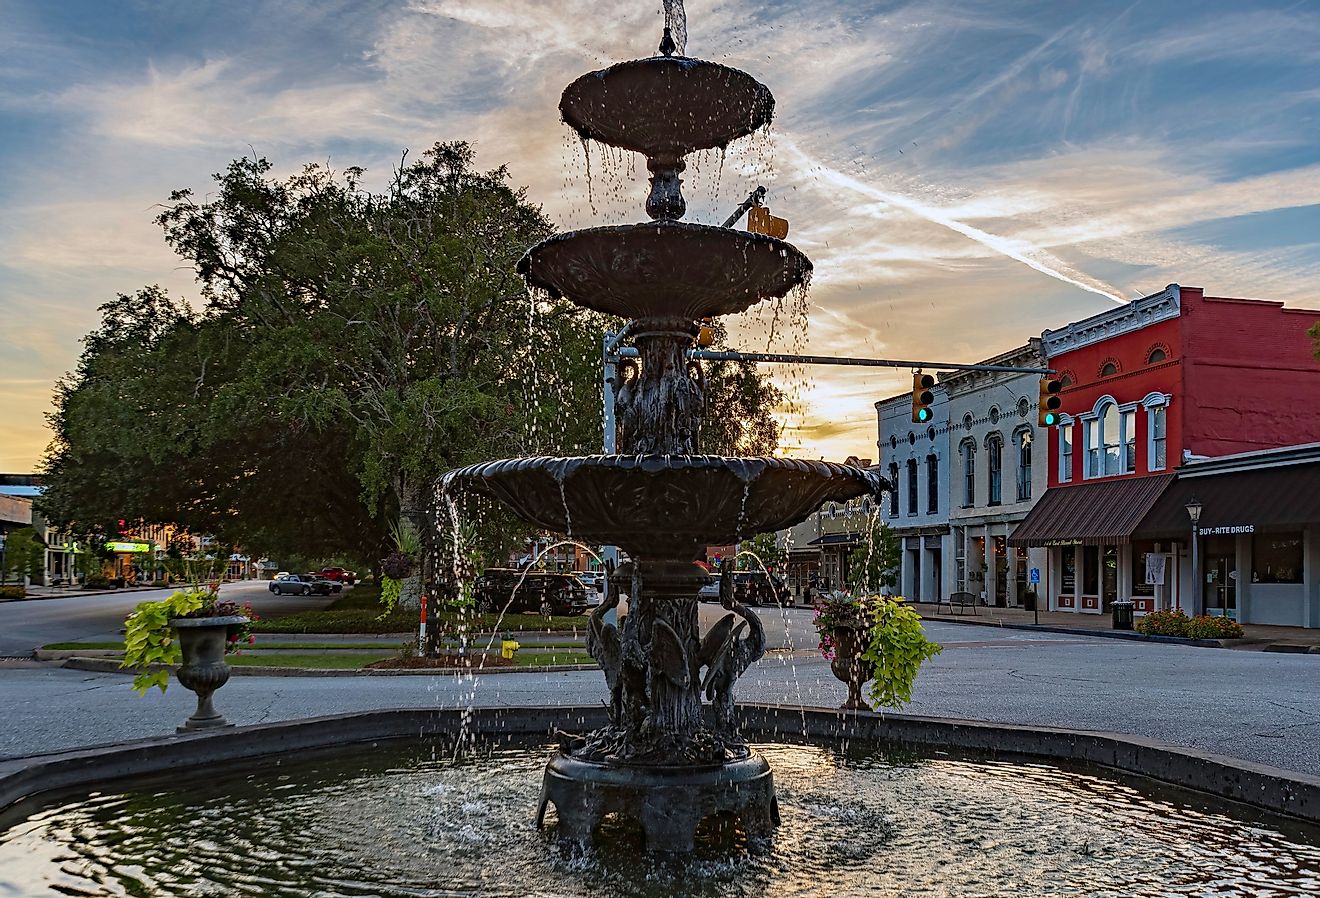 Downtown Eufaula, Alabama. Image credit JNix via Shutterstock